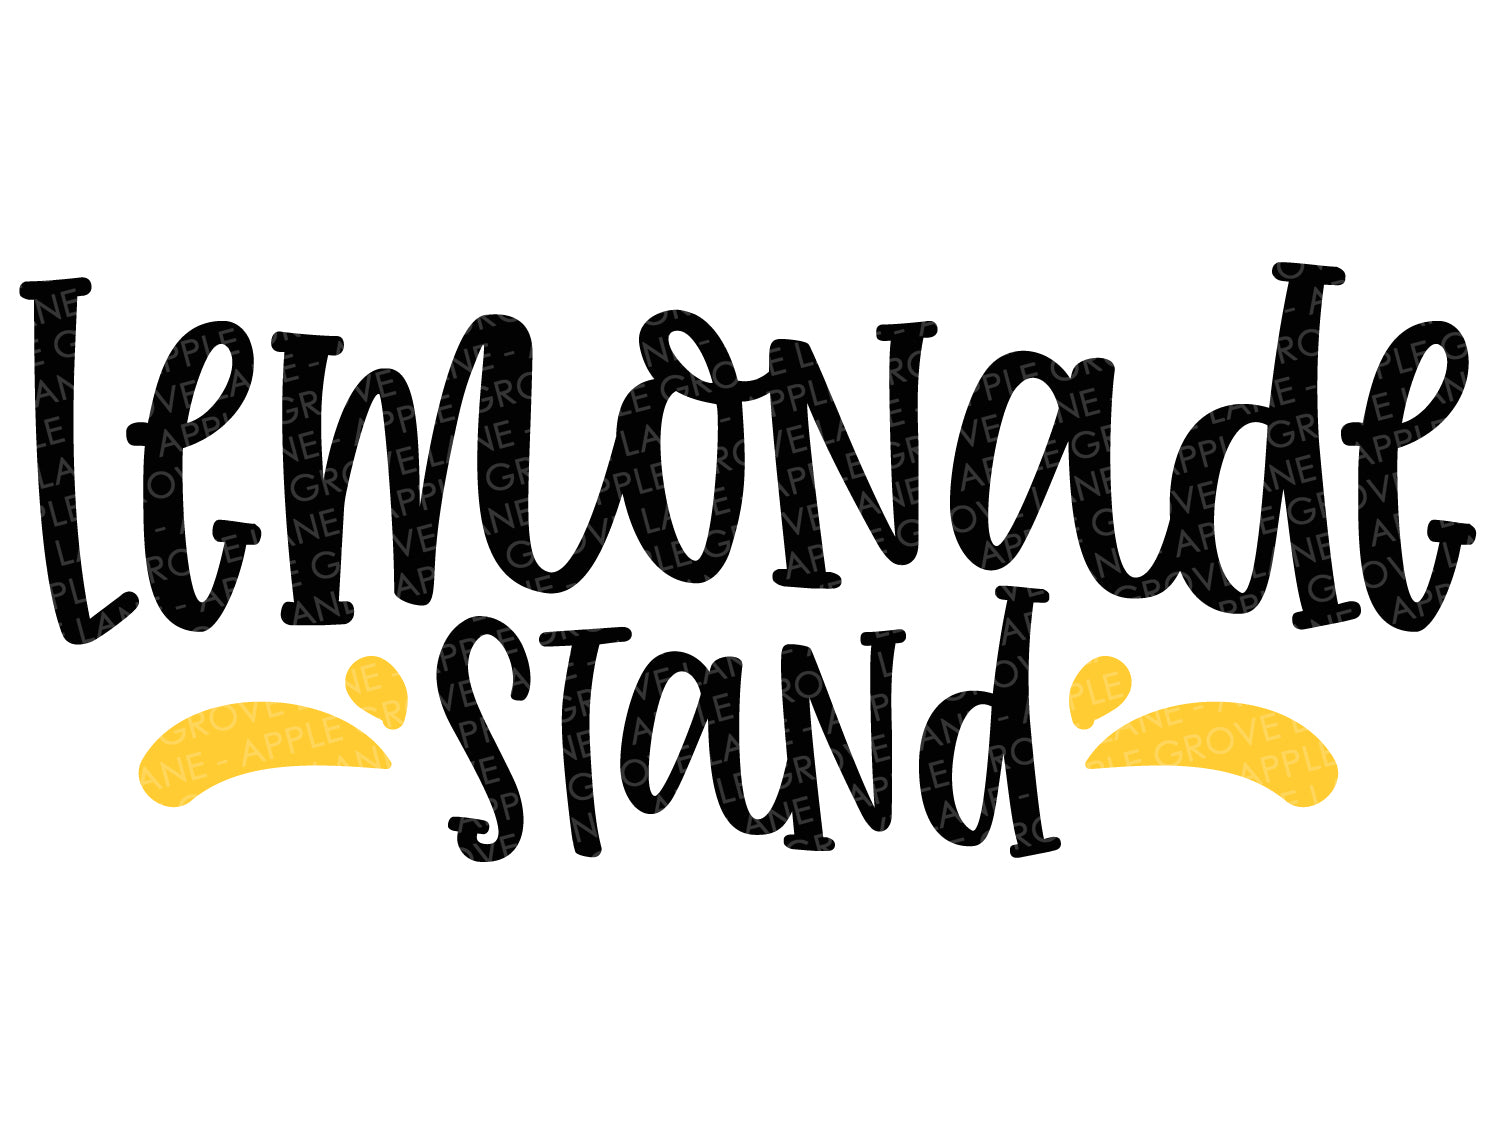 Lemonade Stand Svg - Lemonade Svg - Lemons Svg - Summer Svg - Lemonade Png - Lemon Svg - Lemonade Sign - Kids Lemonade Stand Svg